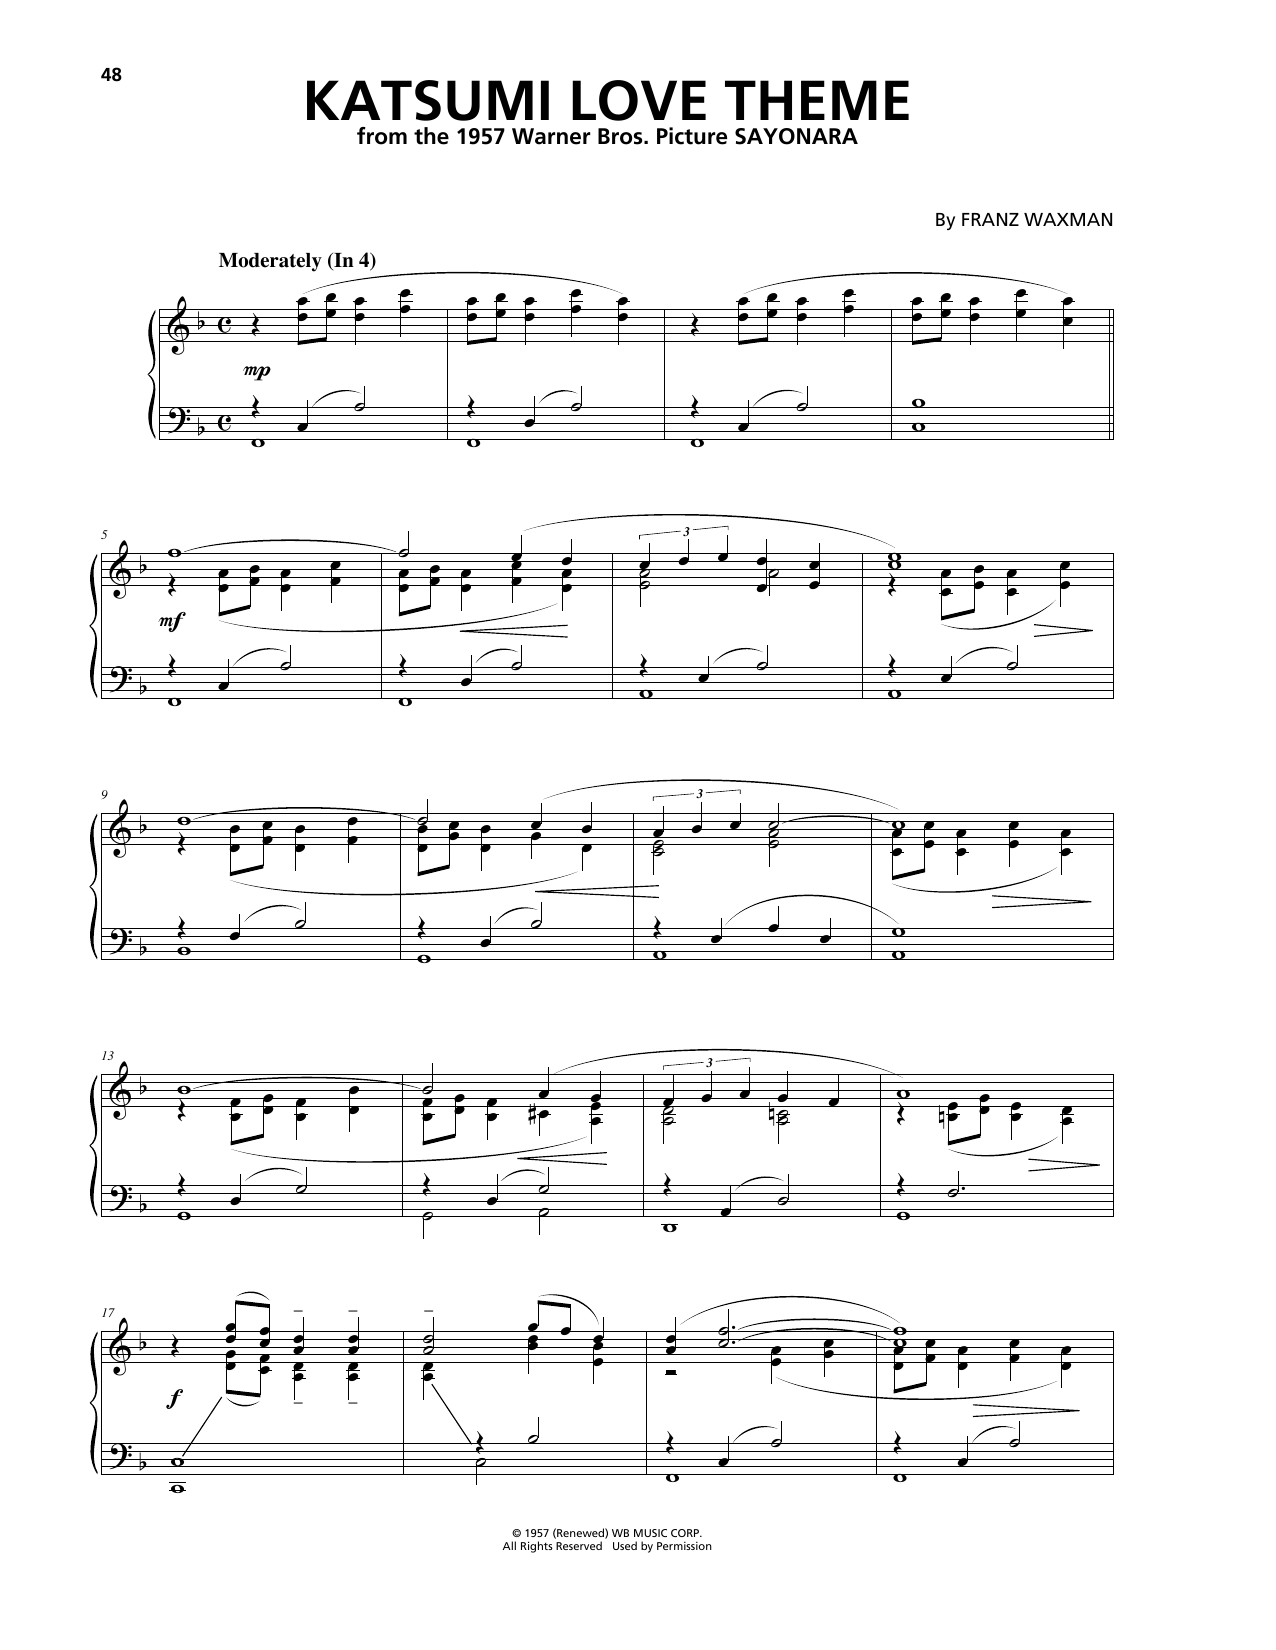 Franz Waxman Katsumi Love Theme Sheet Music Notes & Chords for Piano - Download or Print PDF